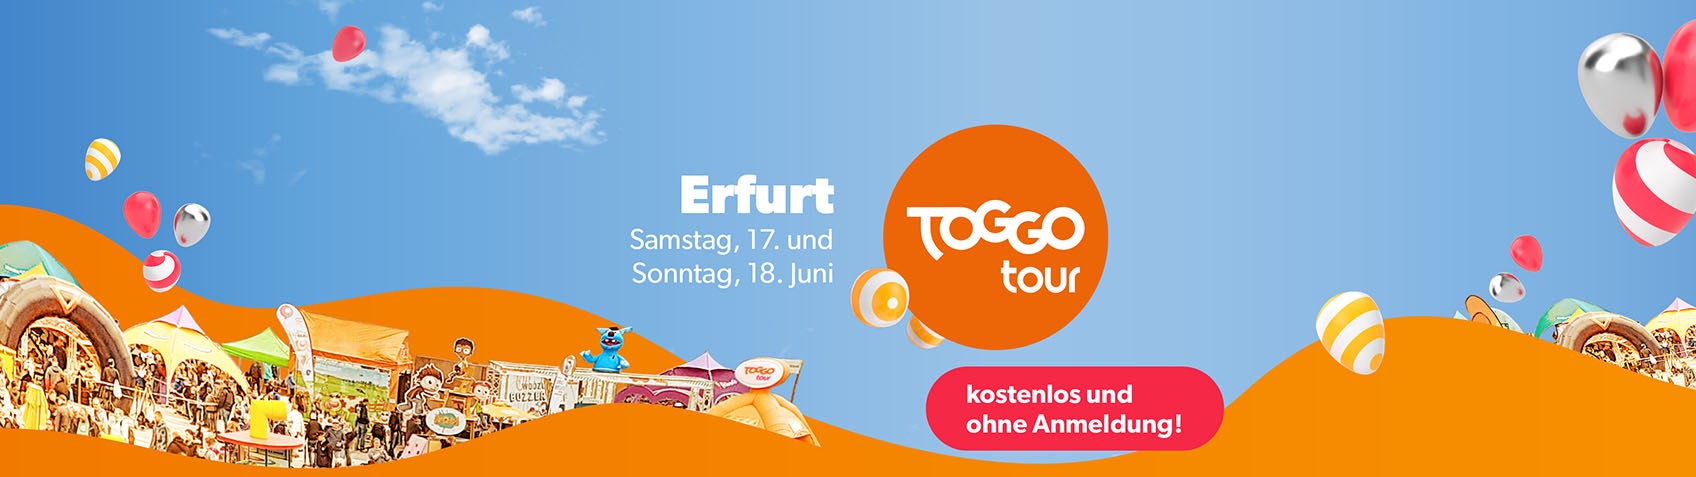 toggo tour erfurt 2023 programm